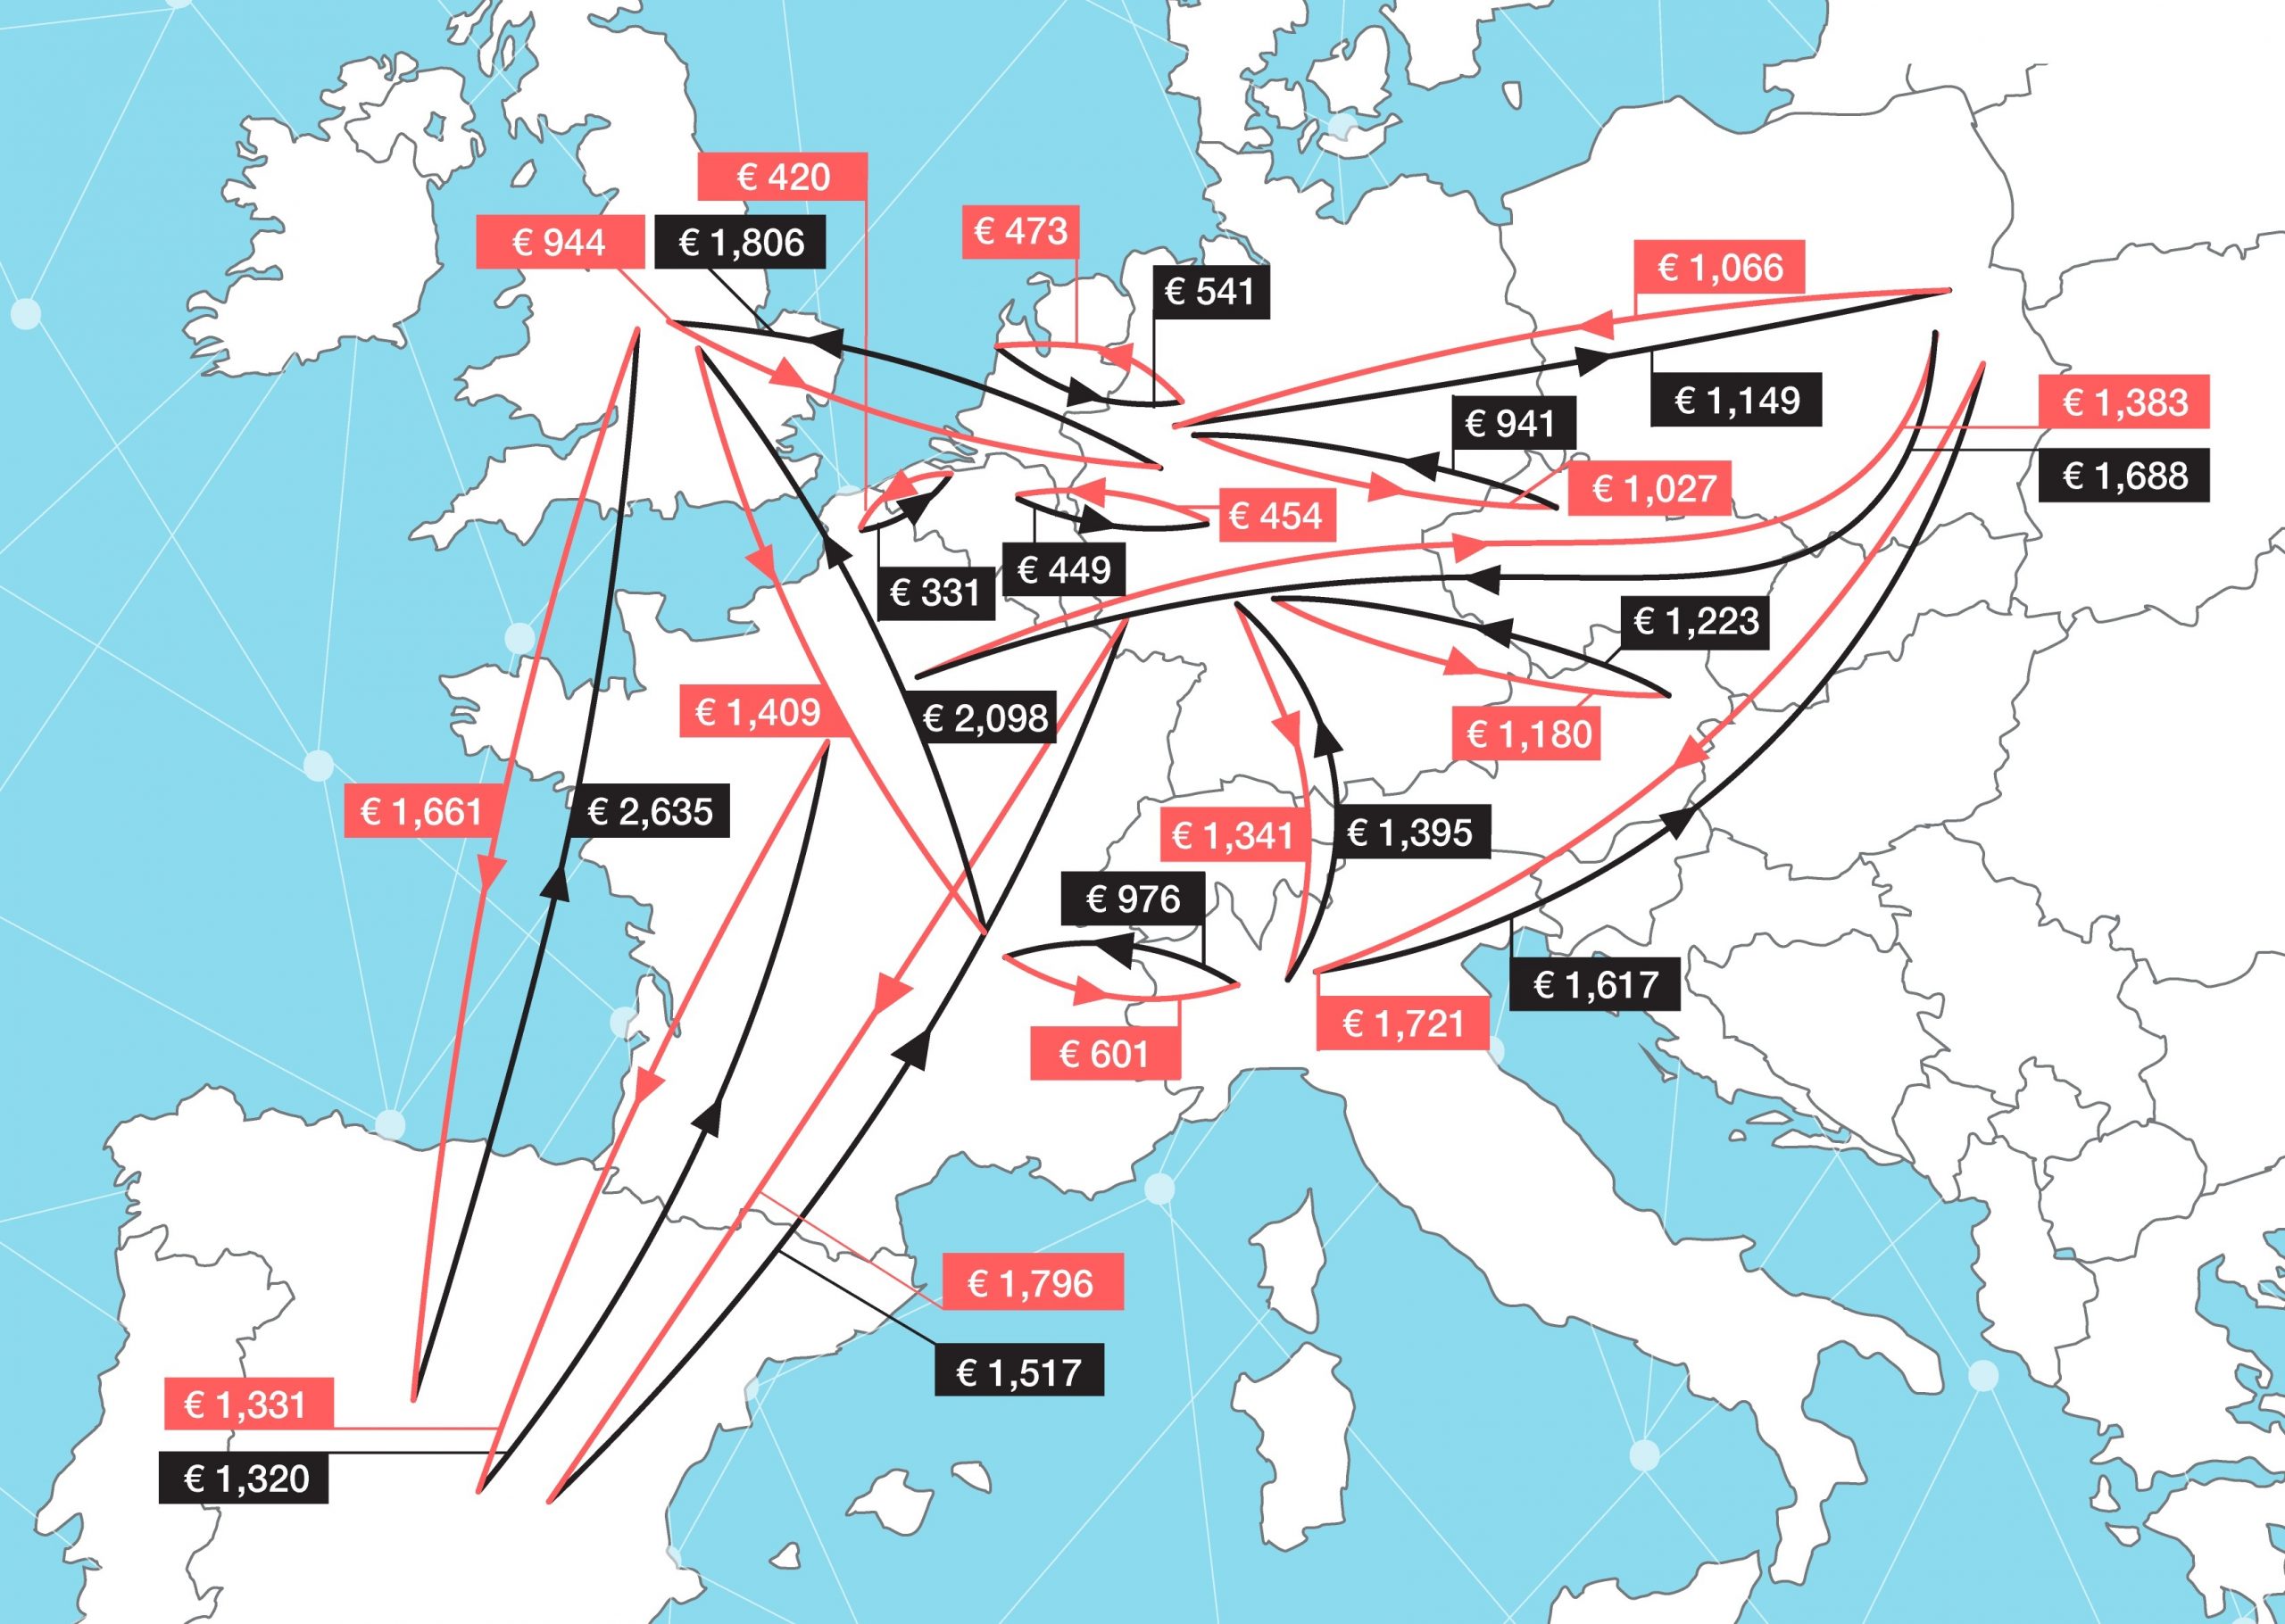 freight travel to europe